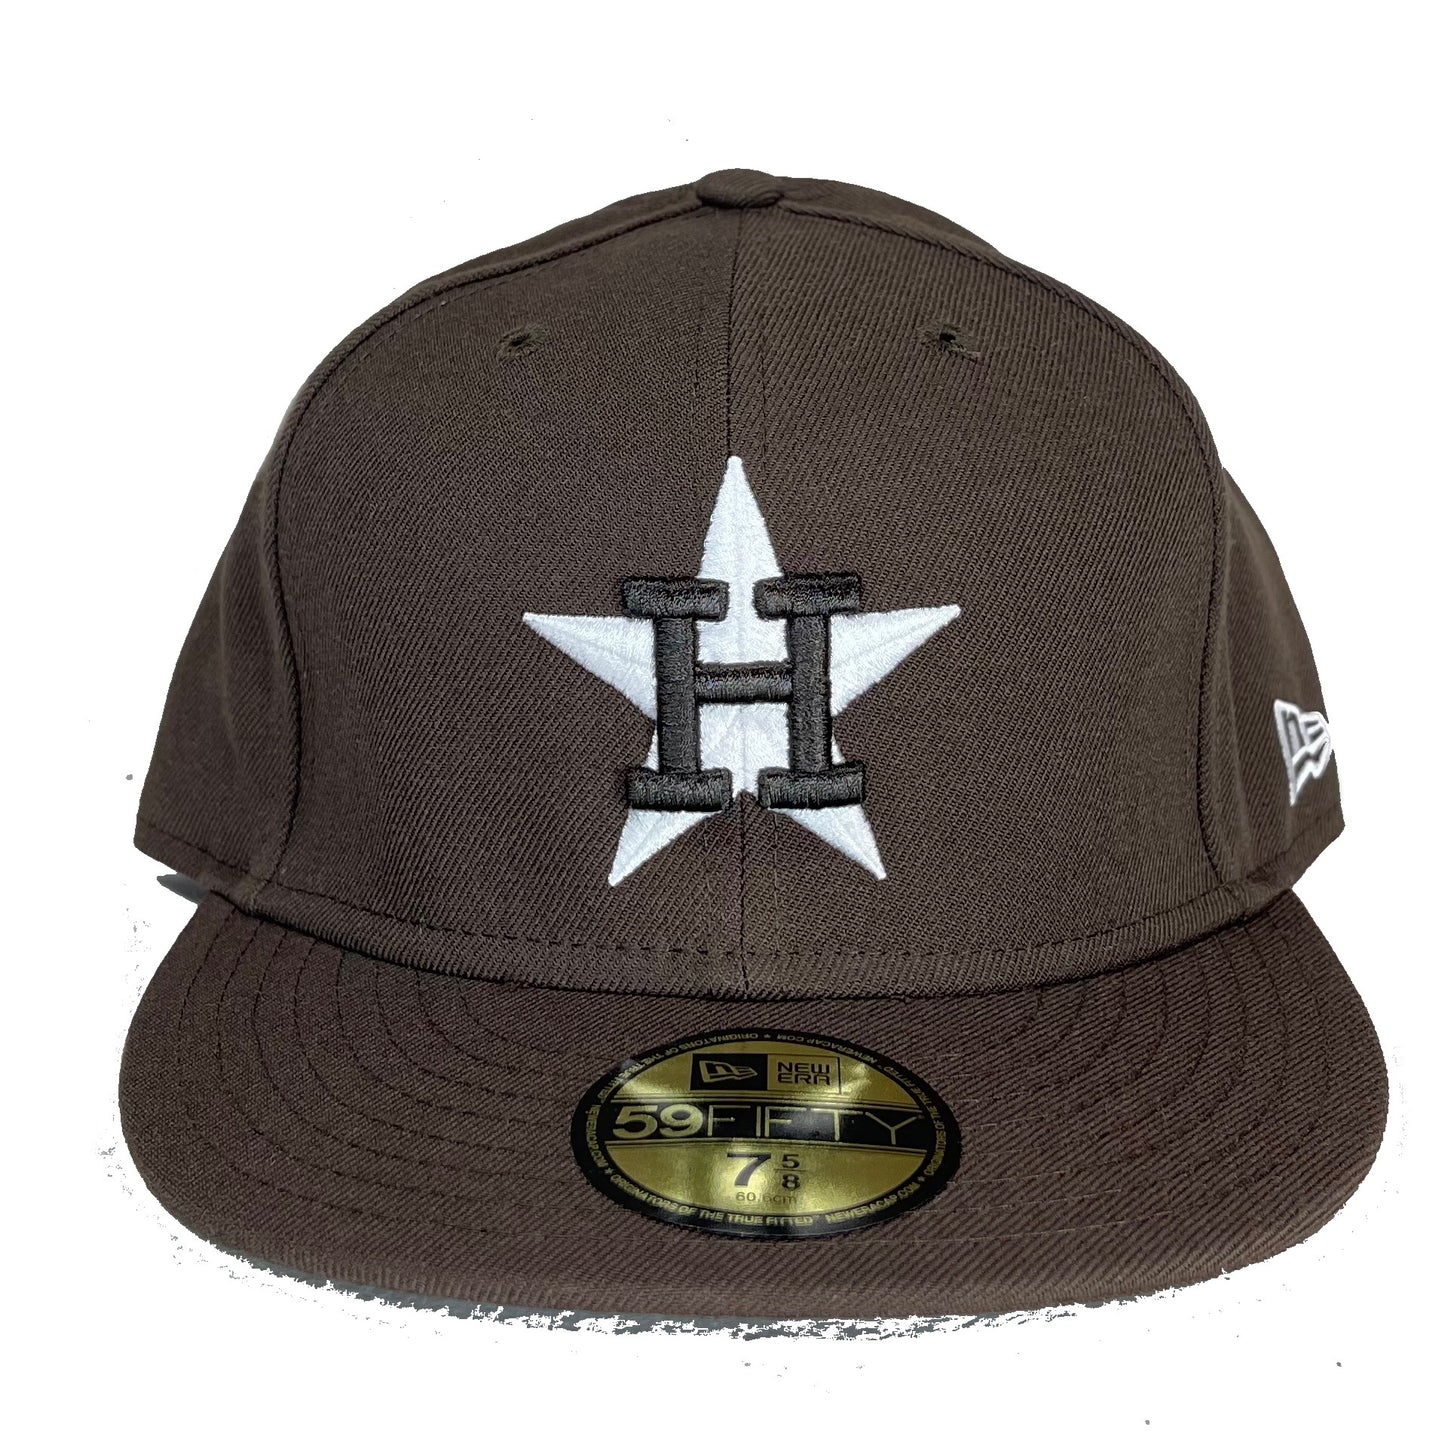 houston astros hat black and white